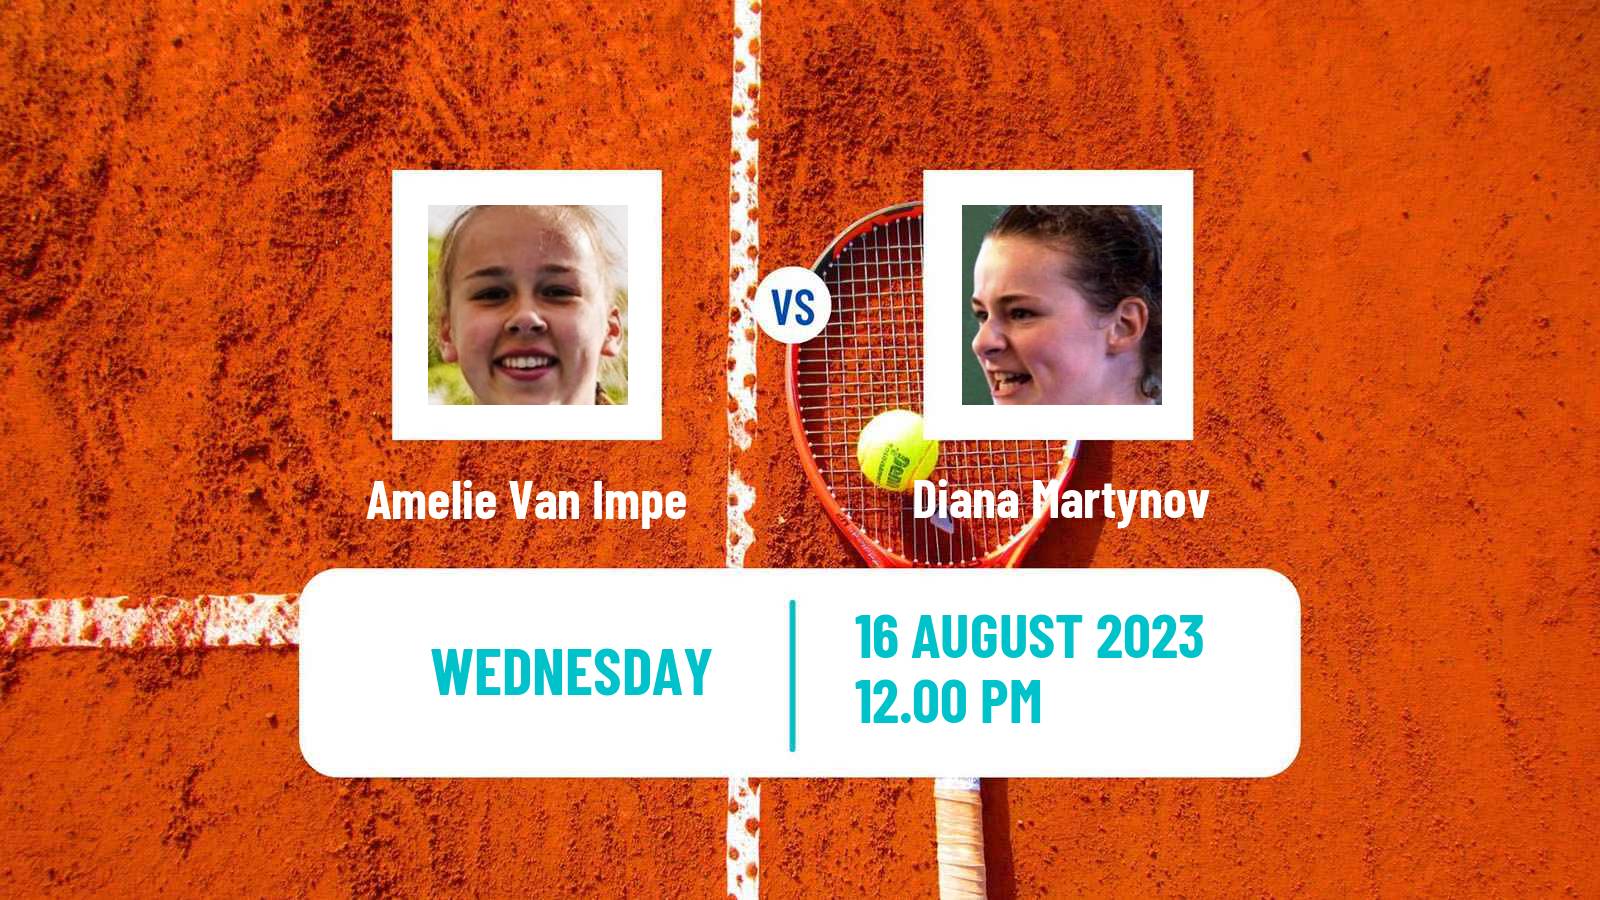 Tennis ITF W15 Duffel Women Amelie Van Impe - Diana Martynov